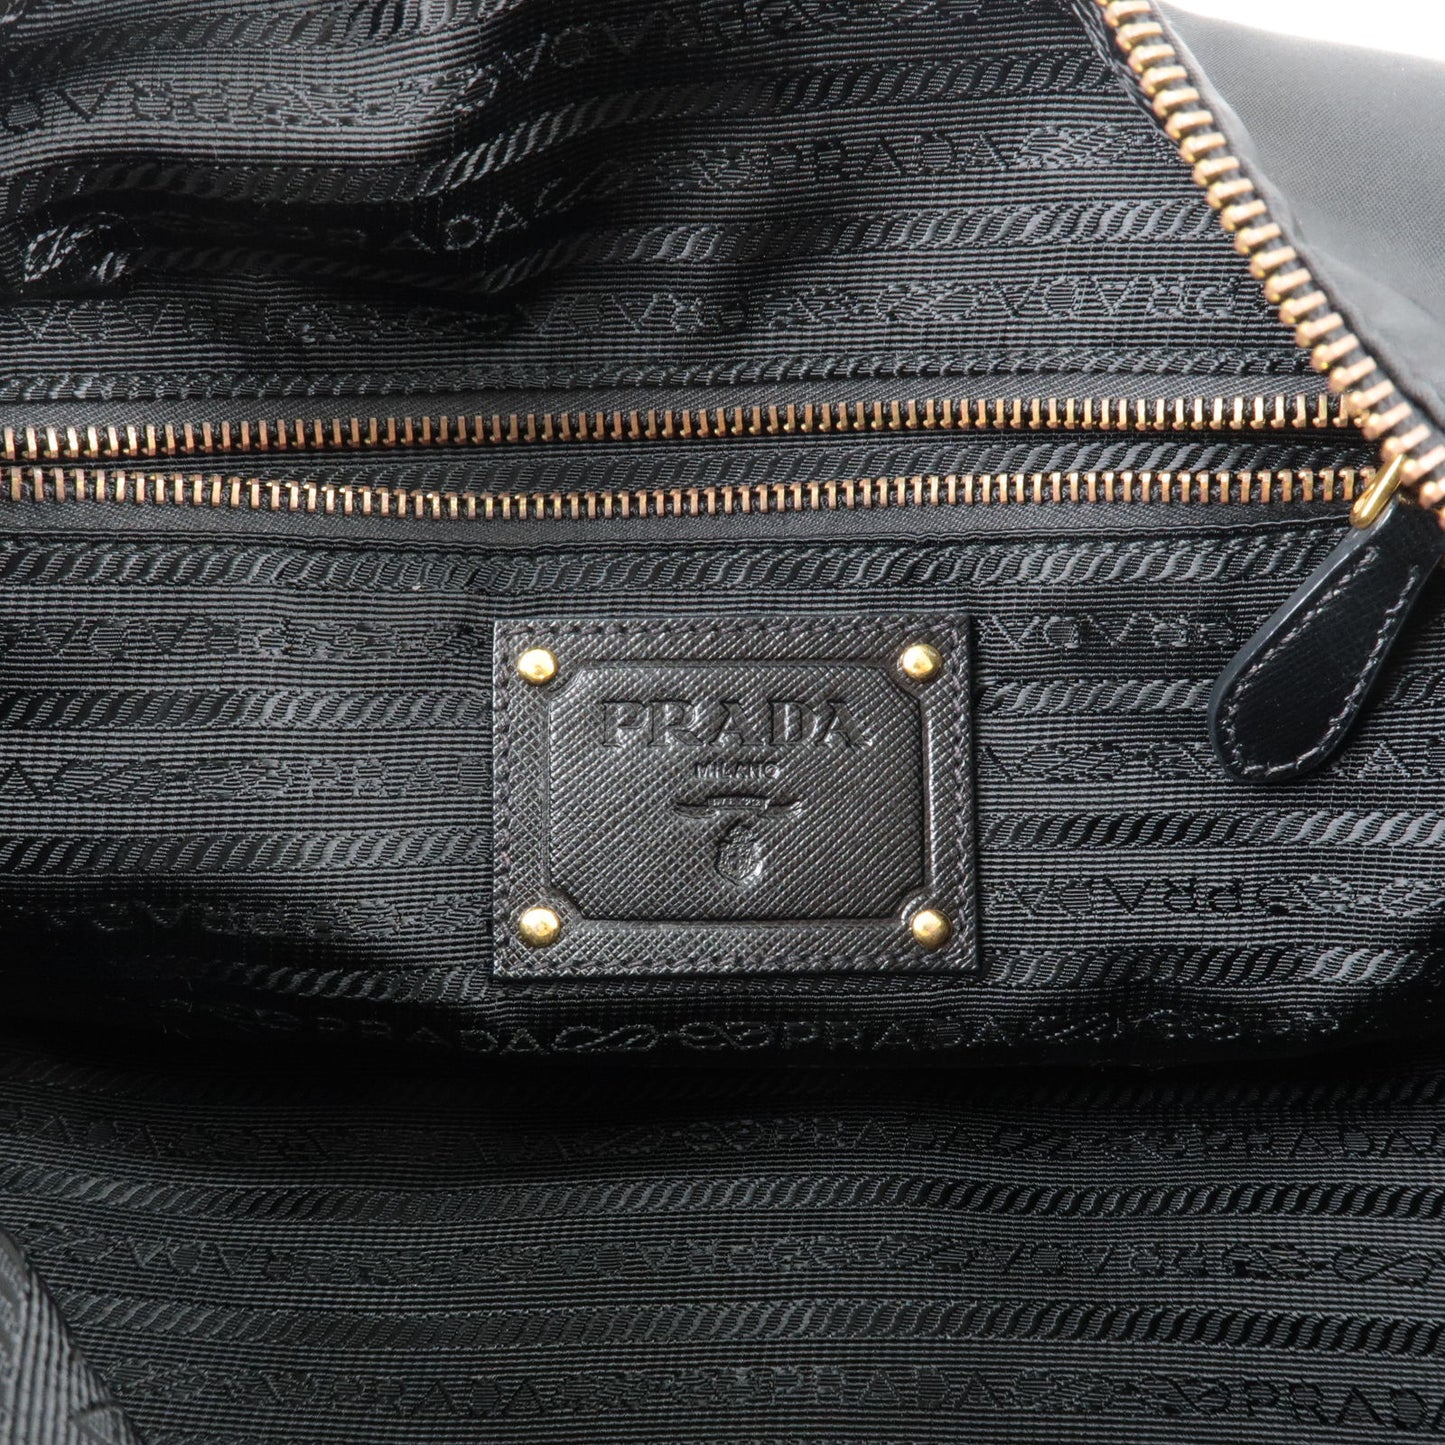 PRADA Logo Nylon Leather Boston Bag Hand Bag Black BL0567